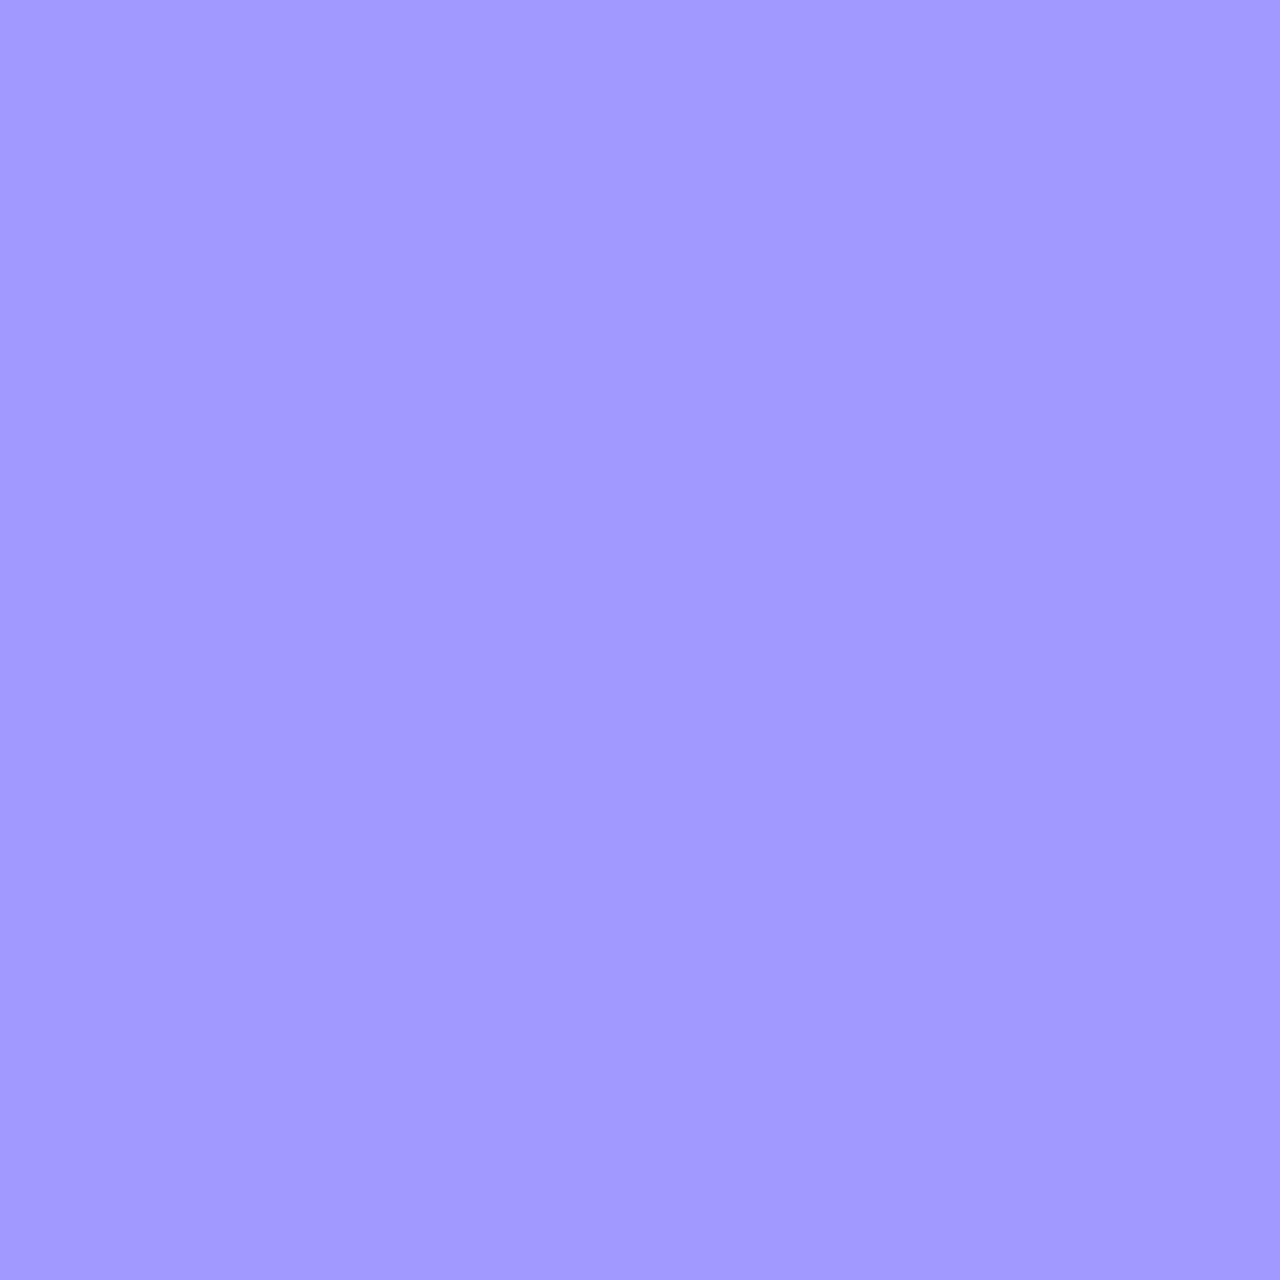 Rosco Calcolor Sheet #4230: 30 Blue, Gels